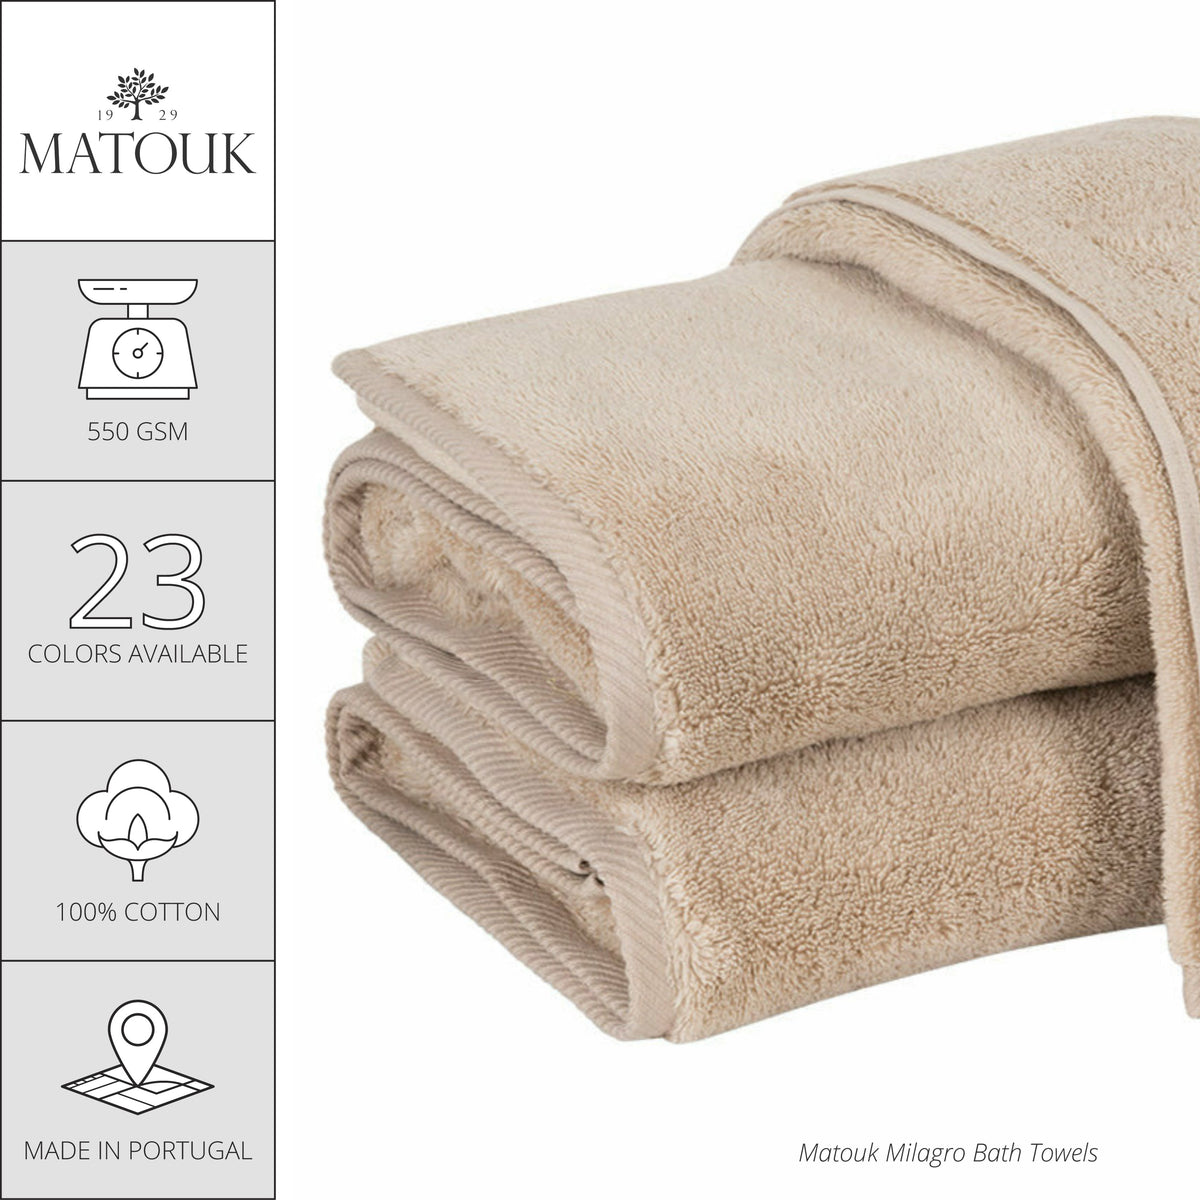 Matouk Milagro Bath Towels and Mats - Grass